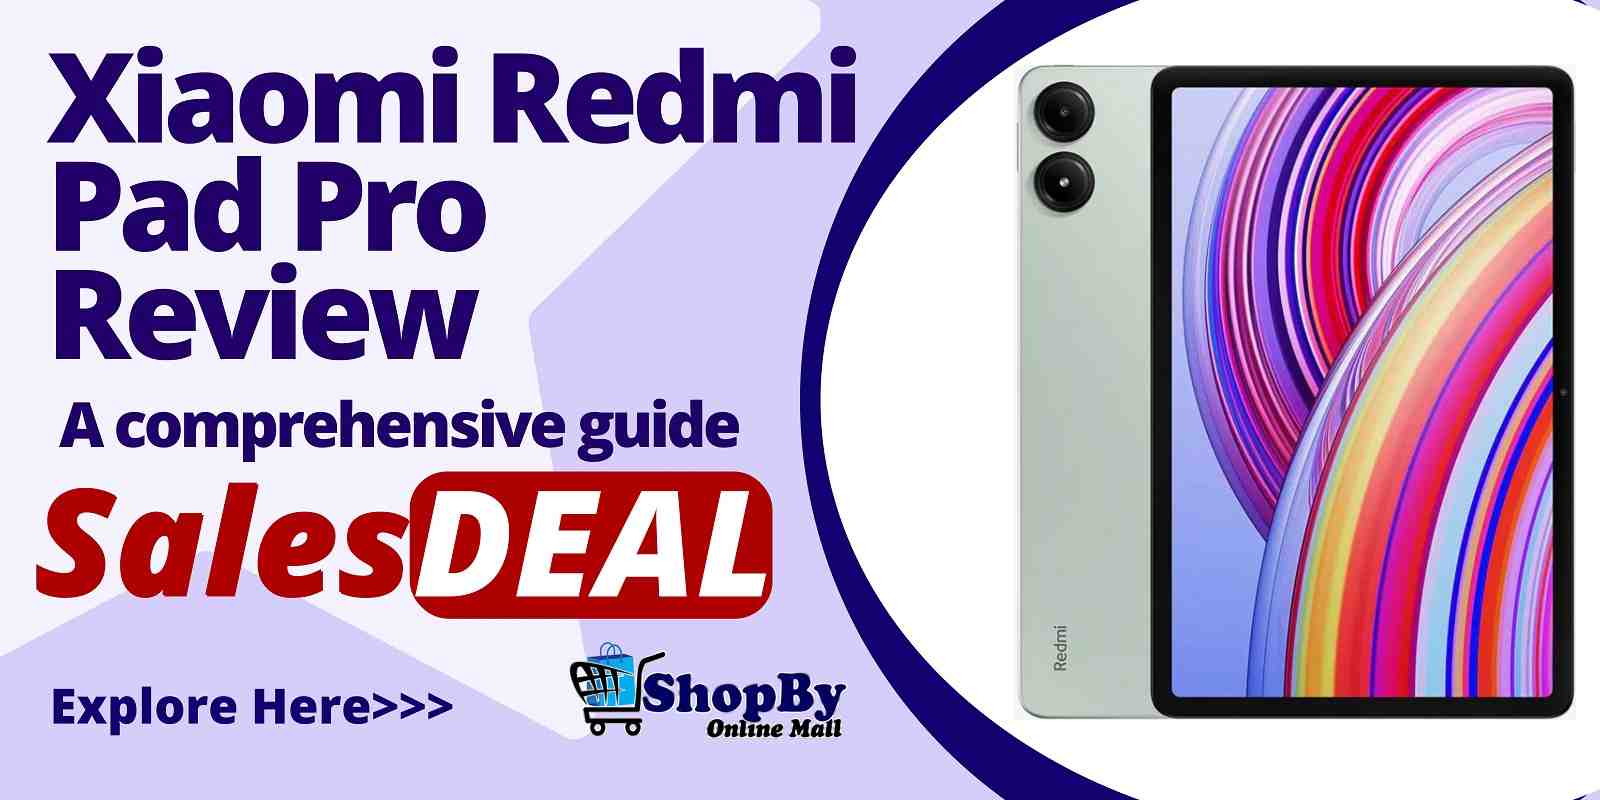 Xiaomi Redmi Pad Pro Review